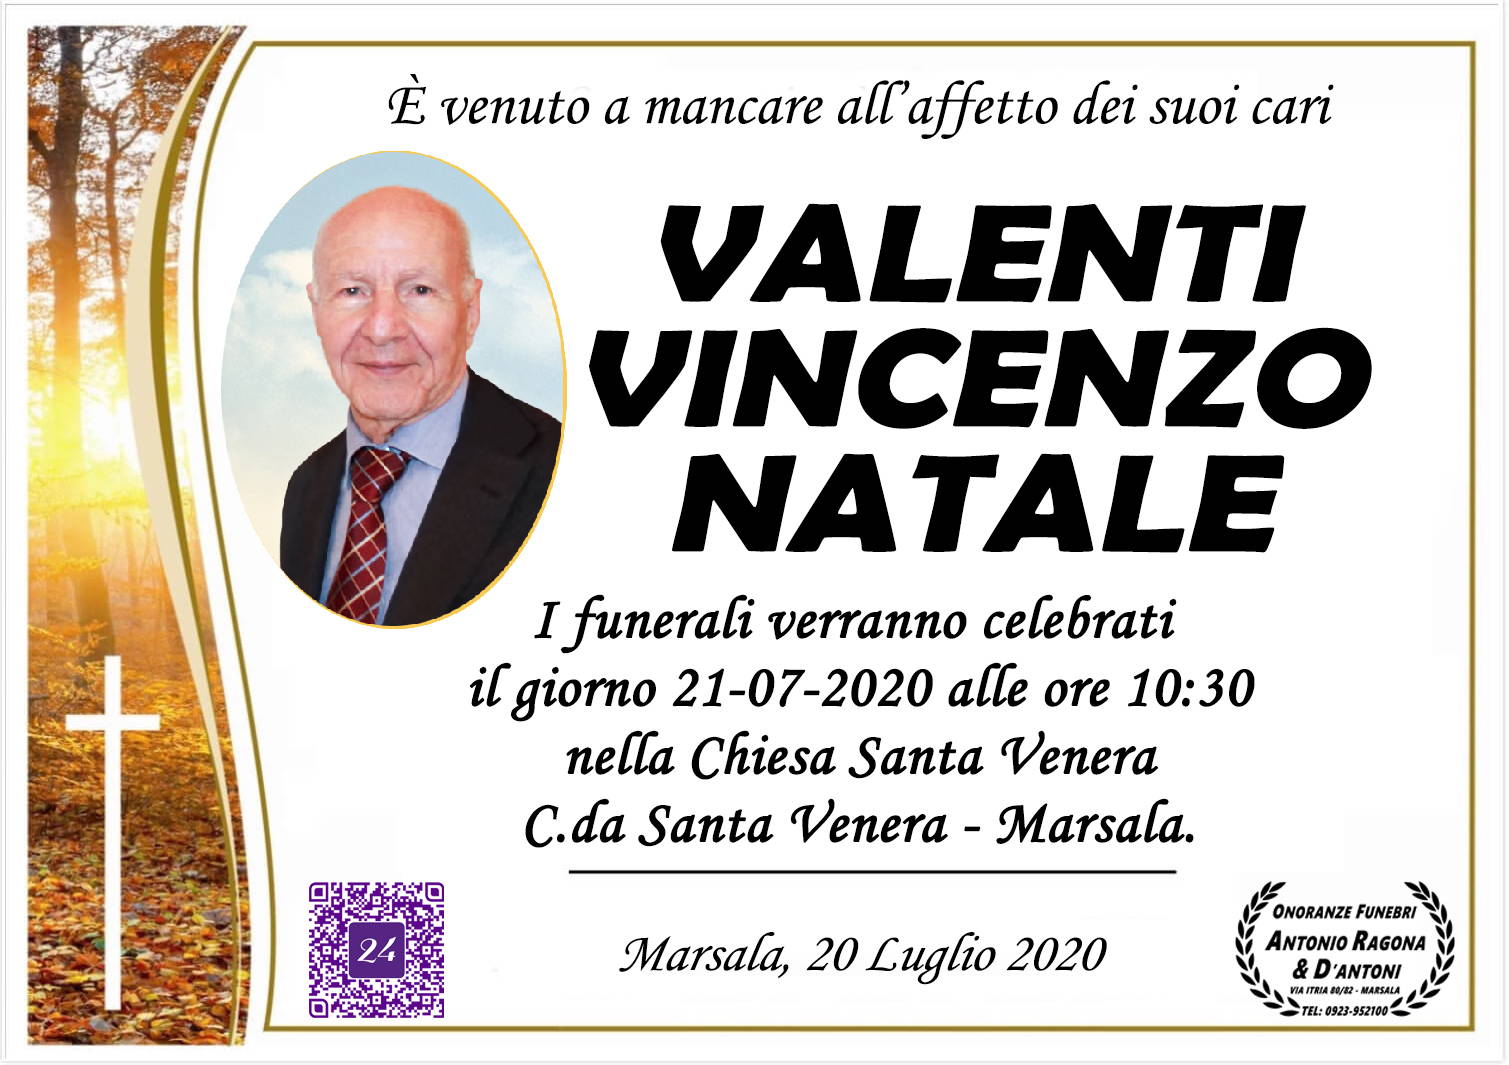 Vincenzo Natale Valenti